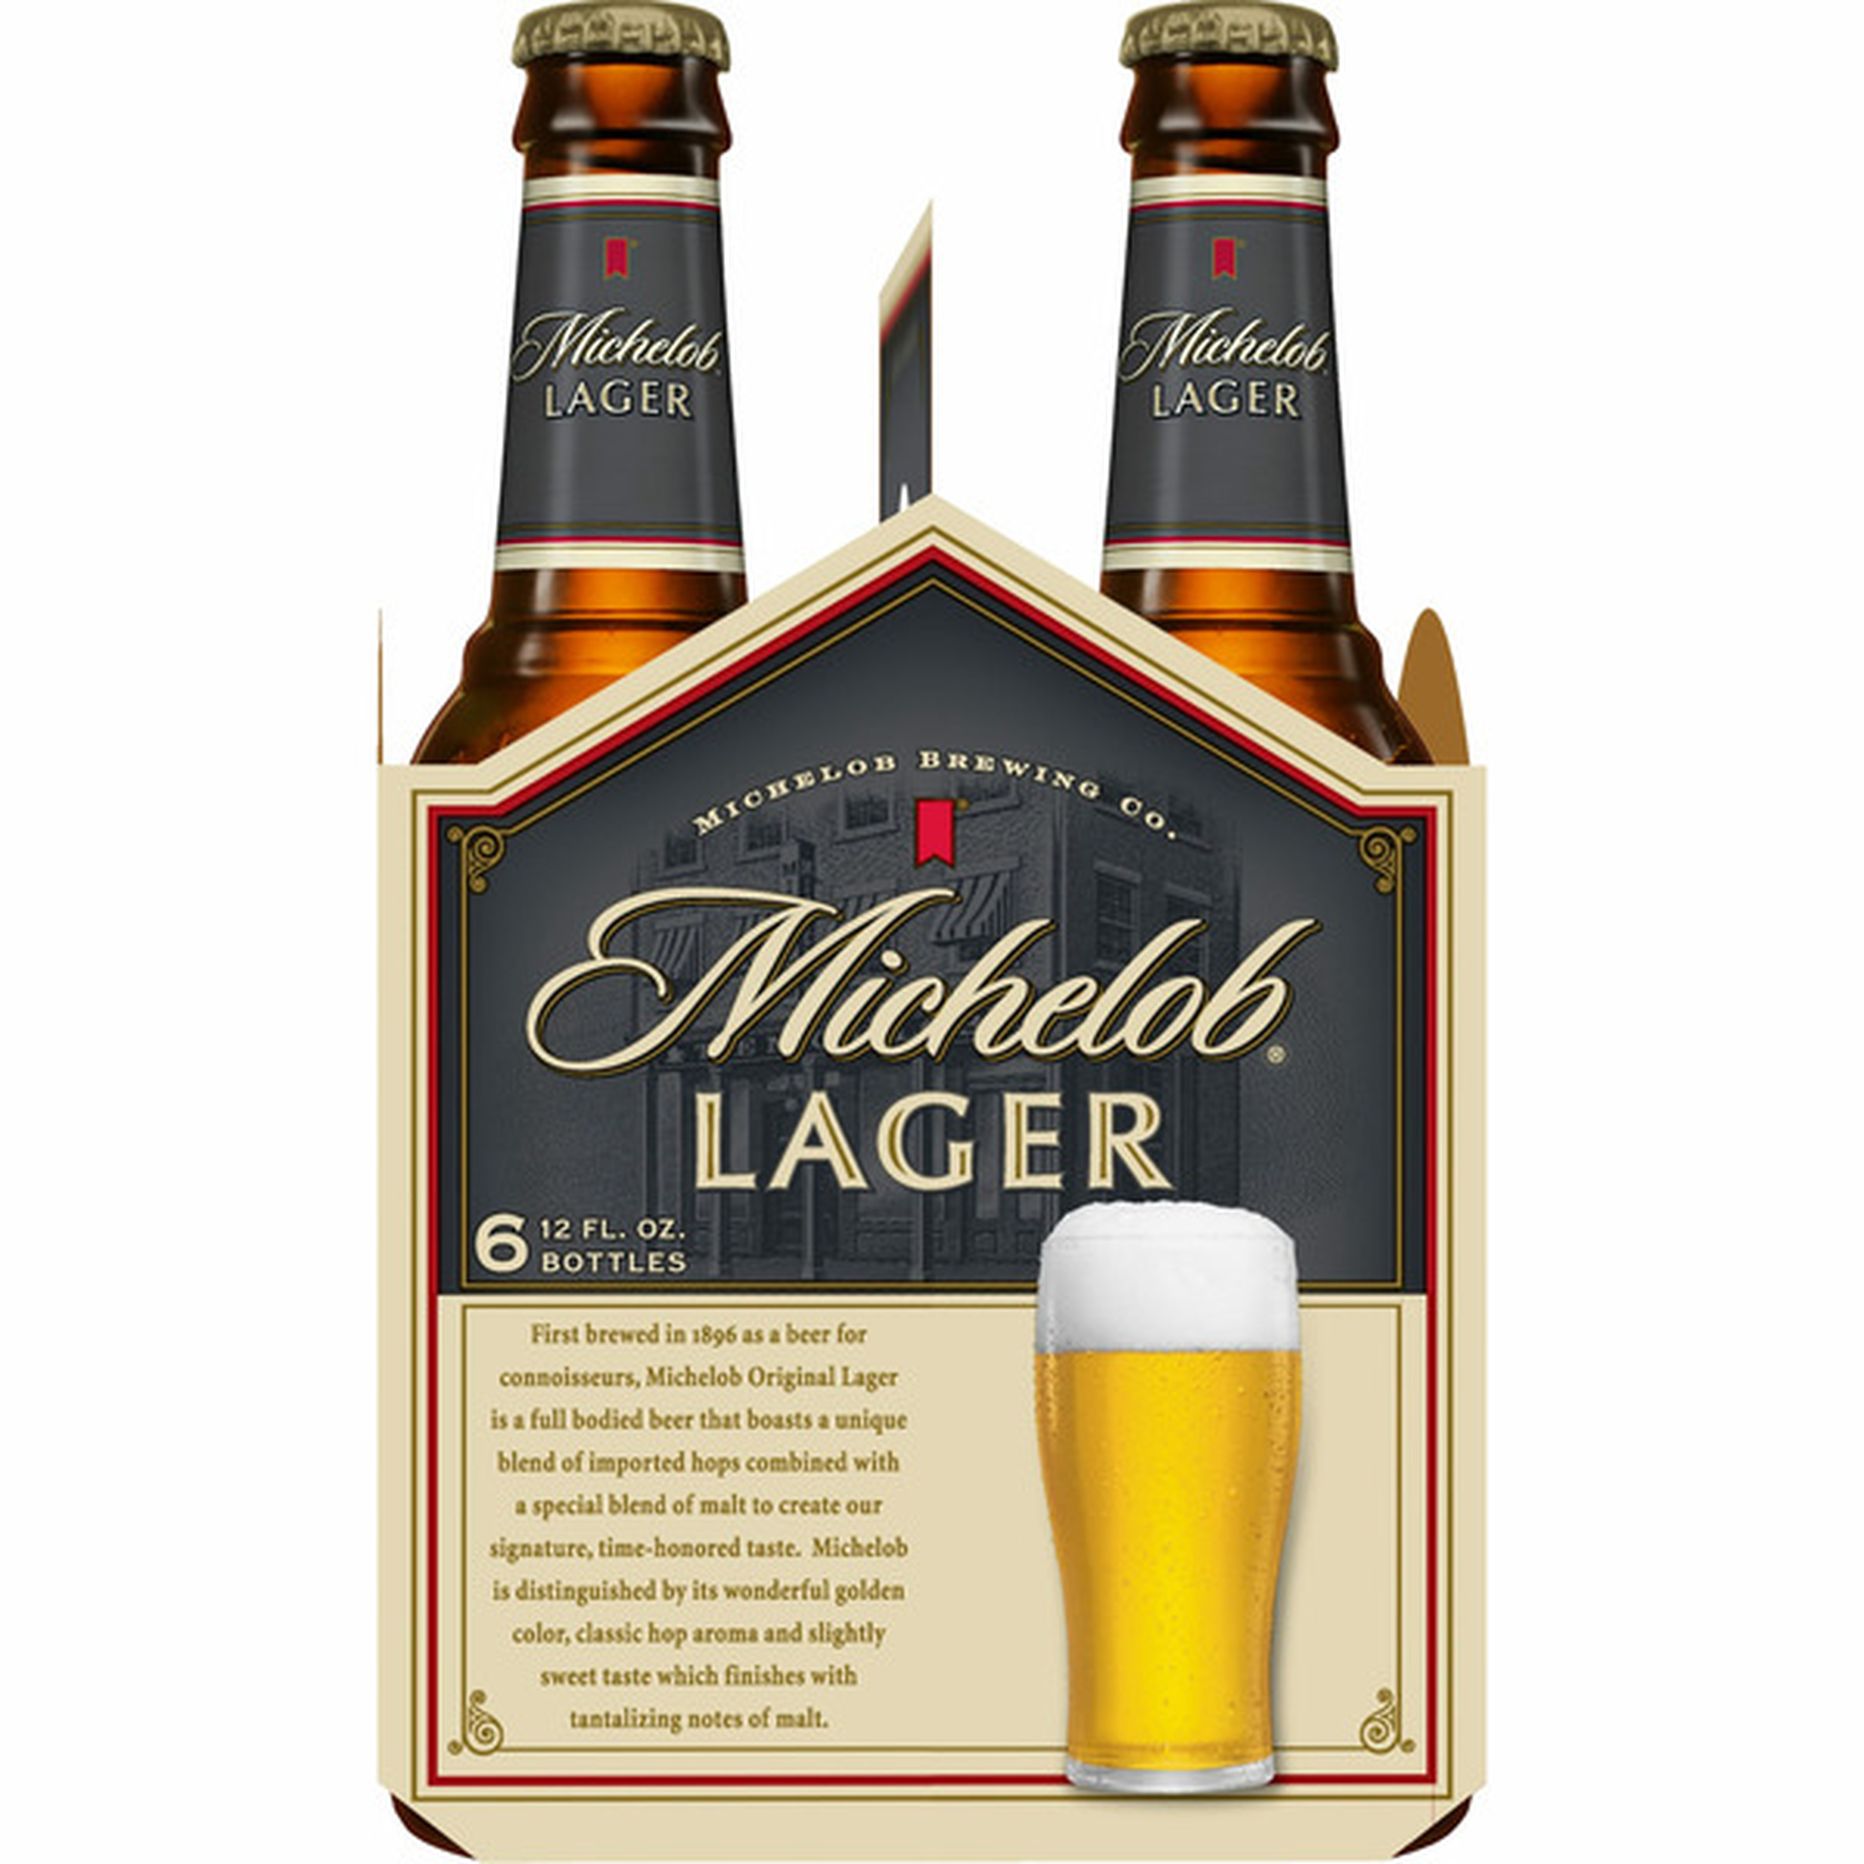 Michelob Lager Beer Bottles 12 Fl Oz Delivery Or Pickup Near Me 